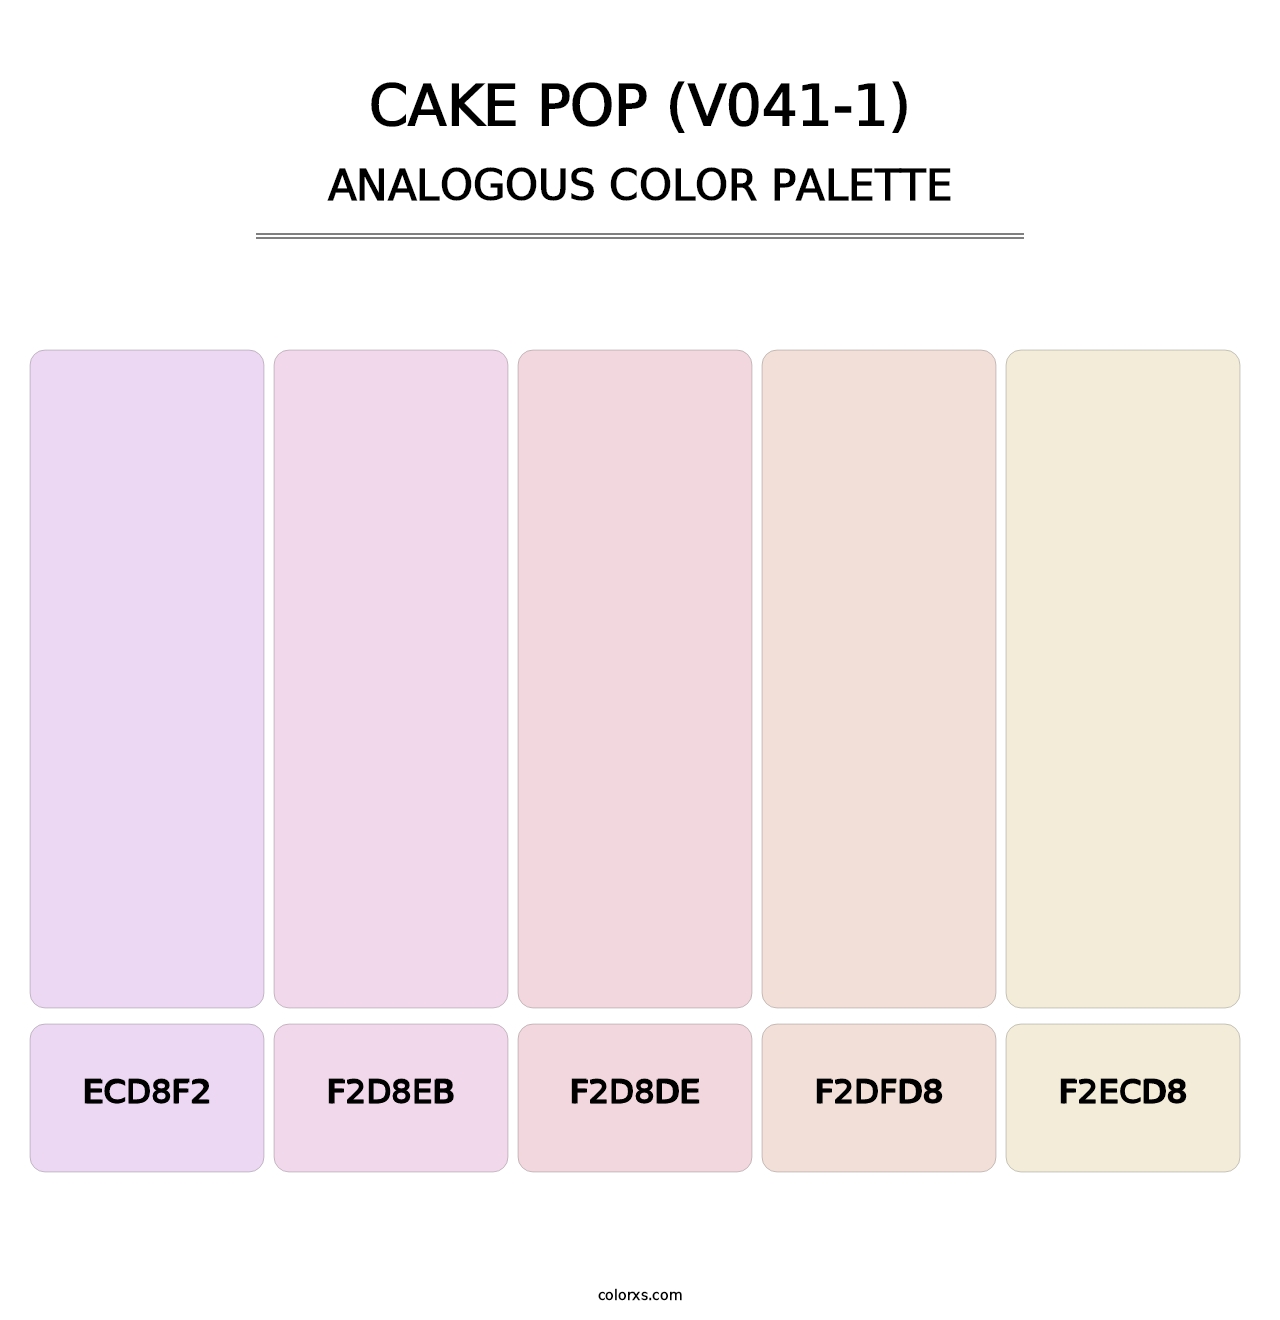 Cake Pop (V041-1) - Analogous Color Palette